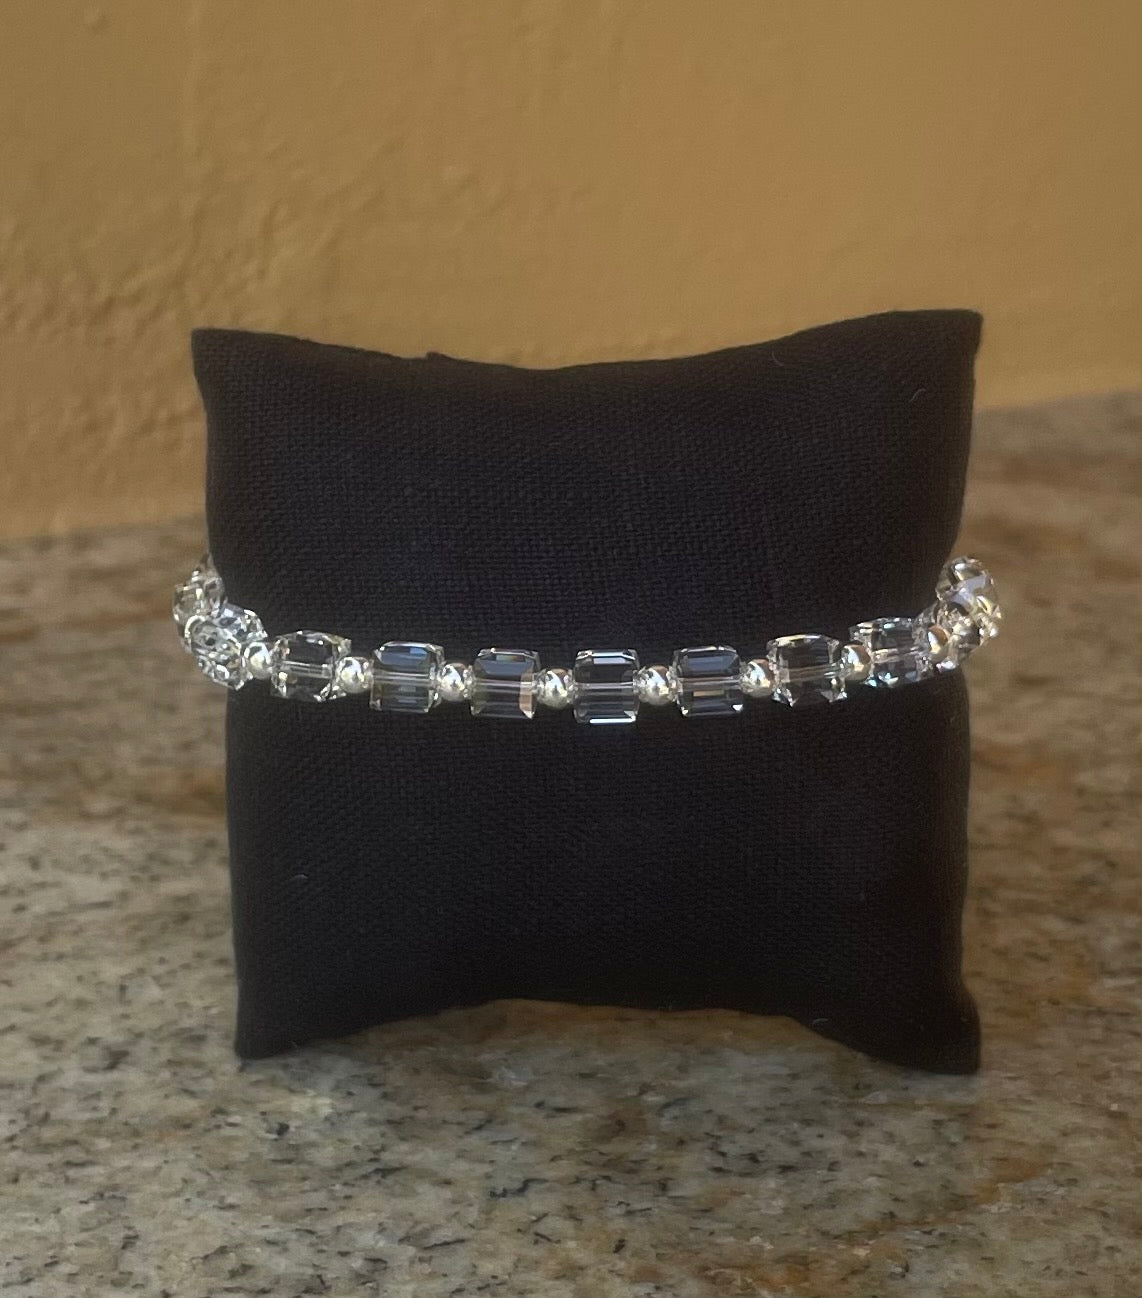 Bracelet - Clear Swarovski crystal bracelet with sterling silver round beads